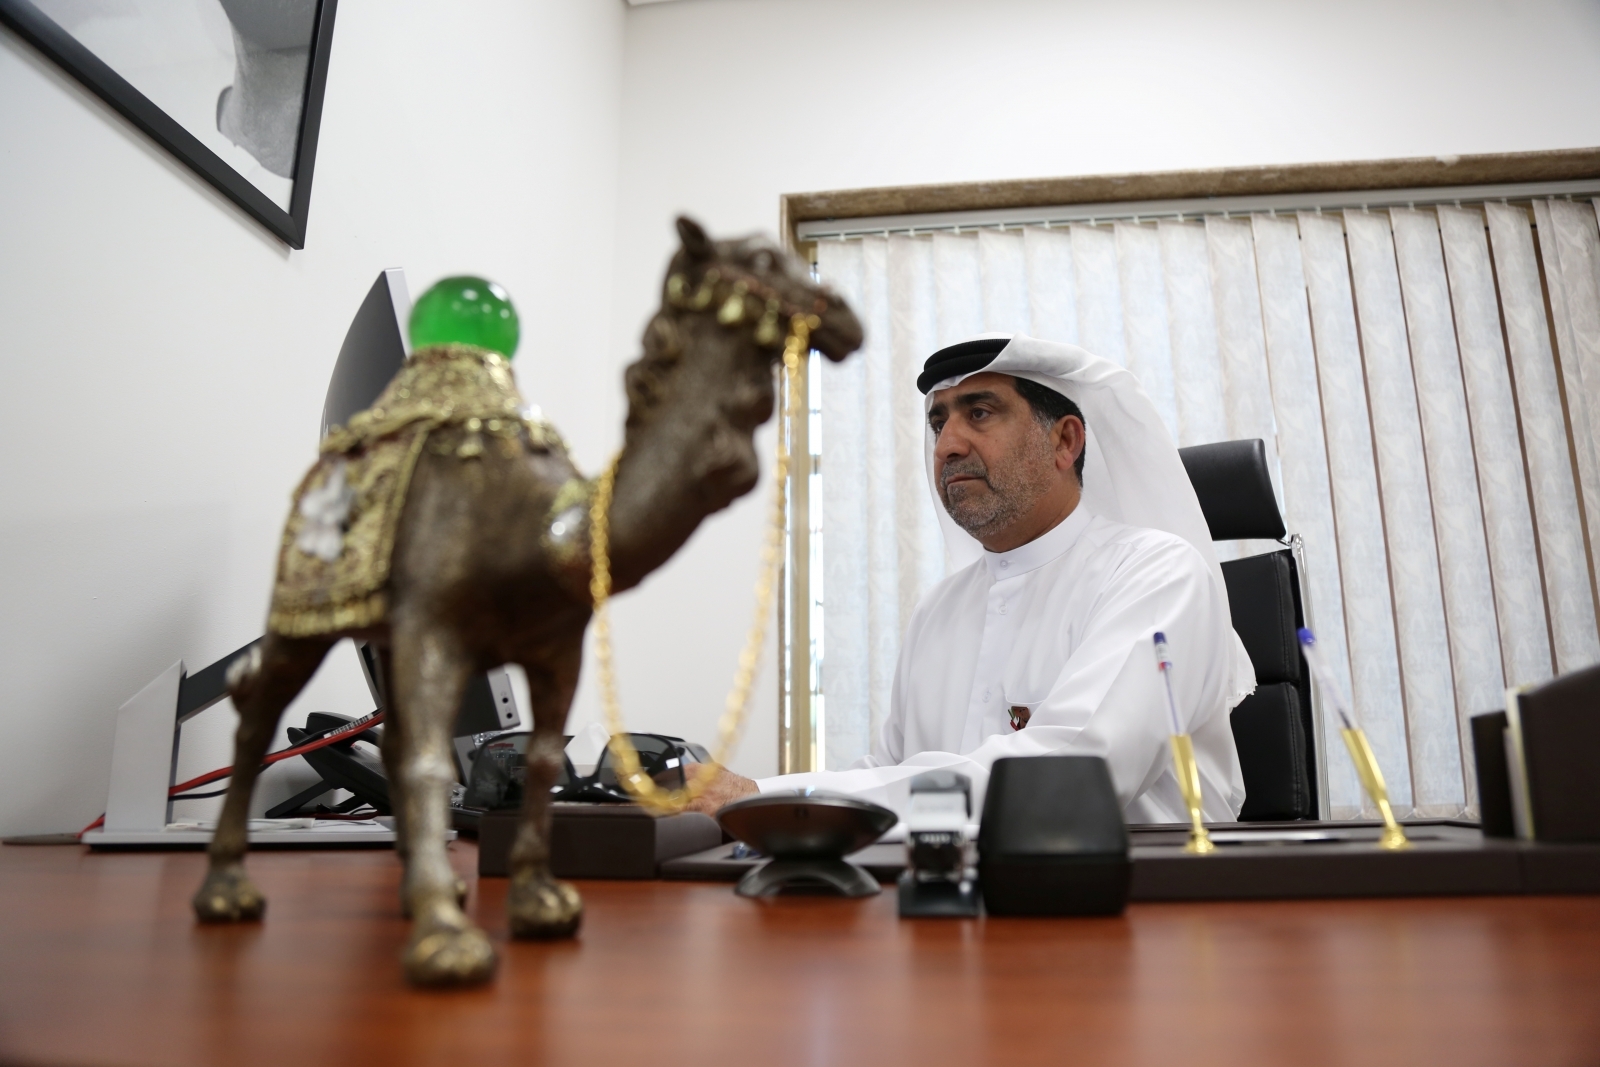 Dubai Camel Hospital boss